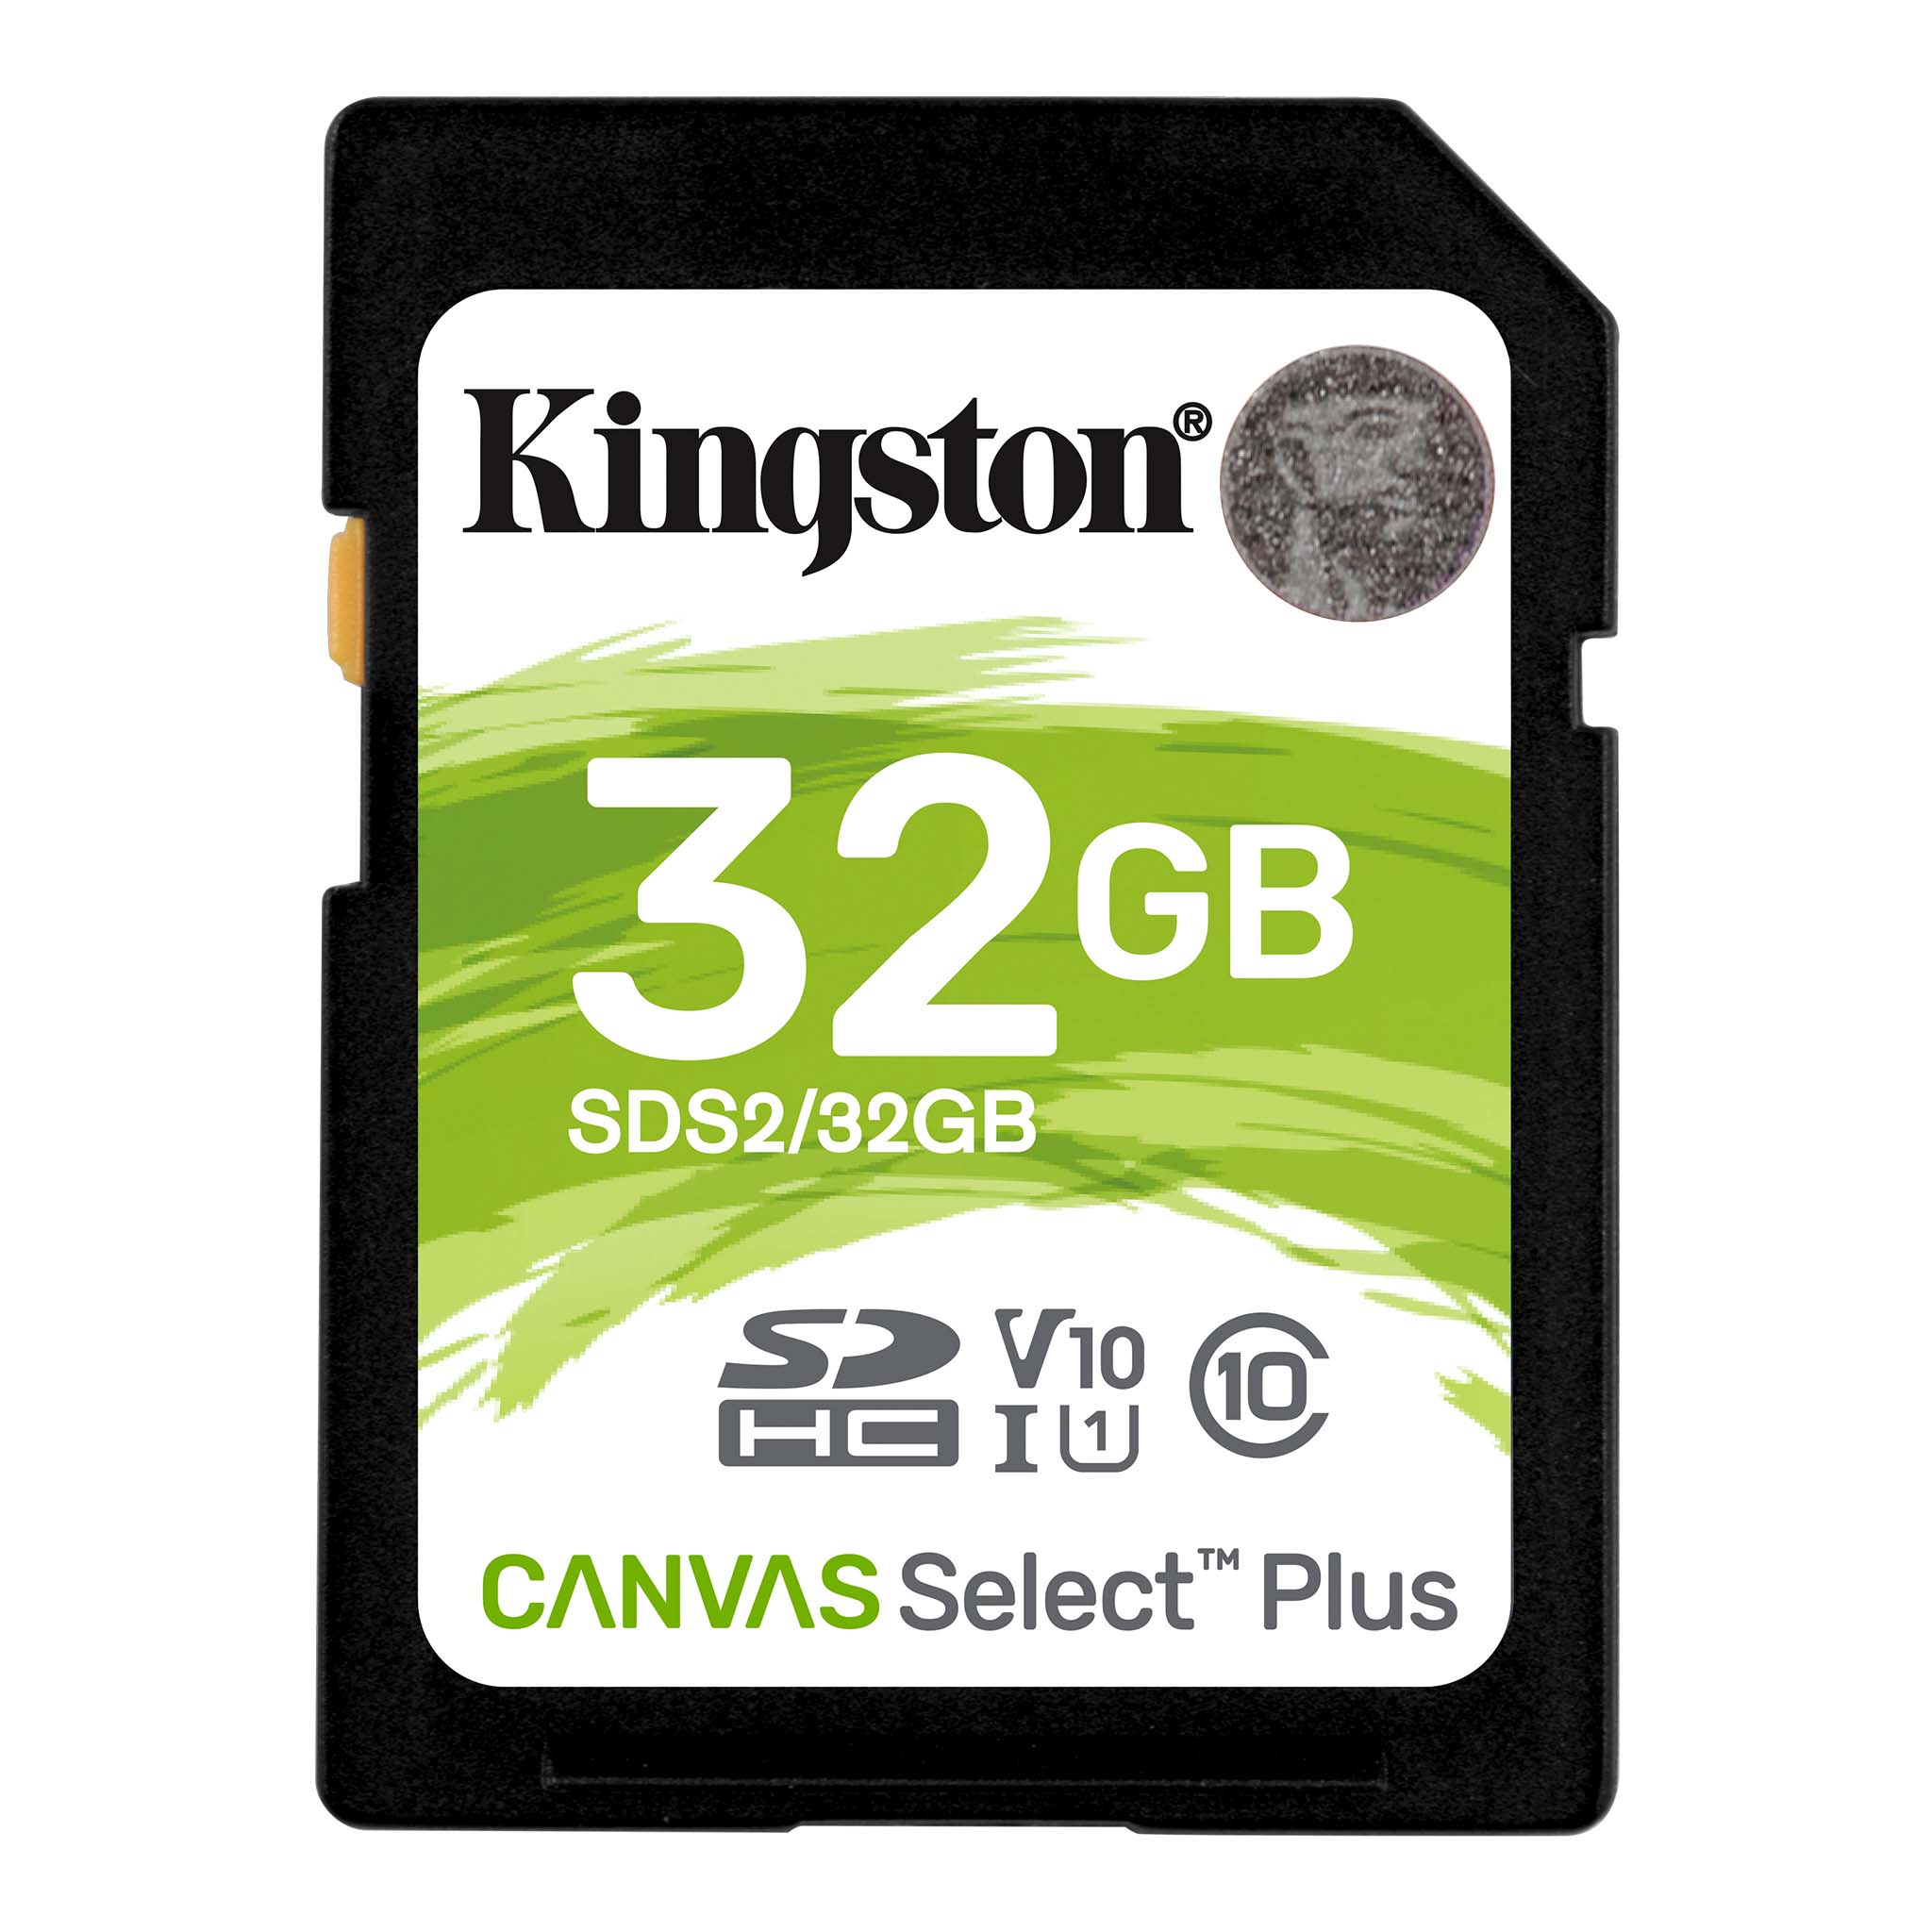 100MBs Works with Kingston Kingston 32GB Motorola Moto G5S Dual MicroSDHC Canvas Select Plus Card Verified by SanFlash. 